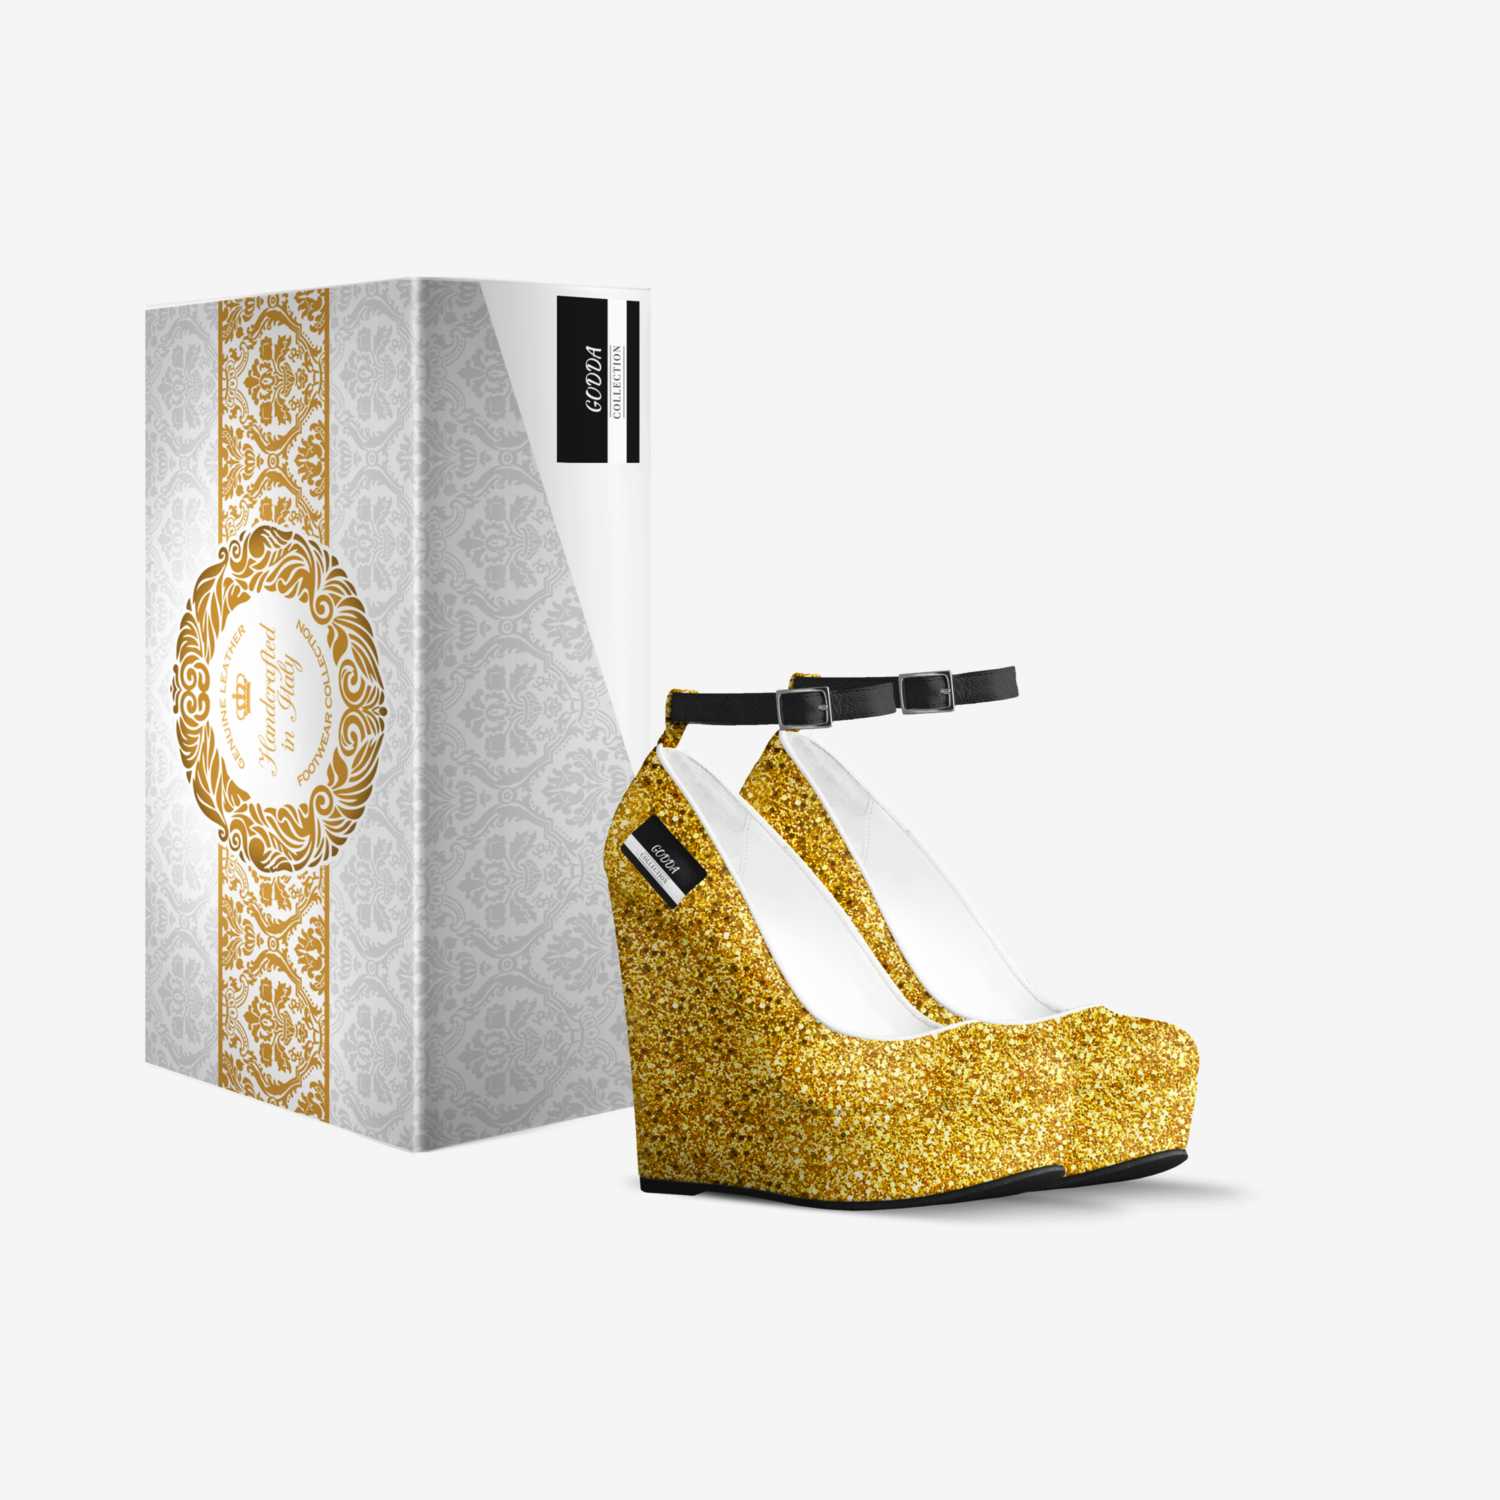 godda custom made in Italy shoes by Sabrina Nesmith | Box view